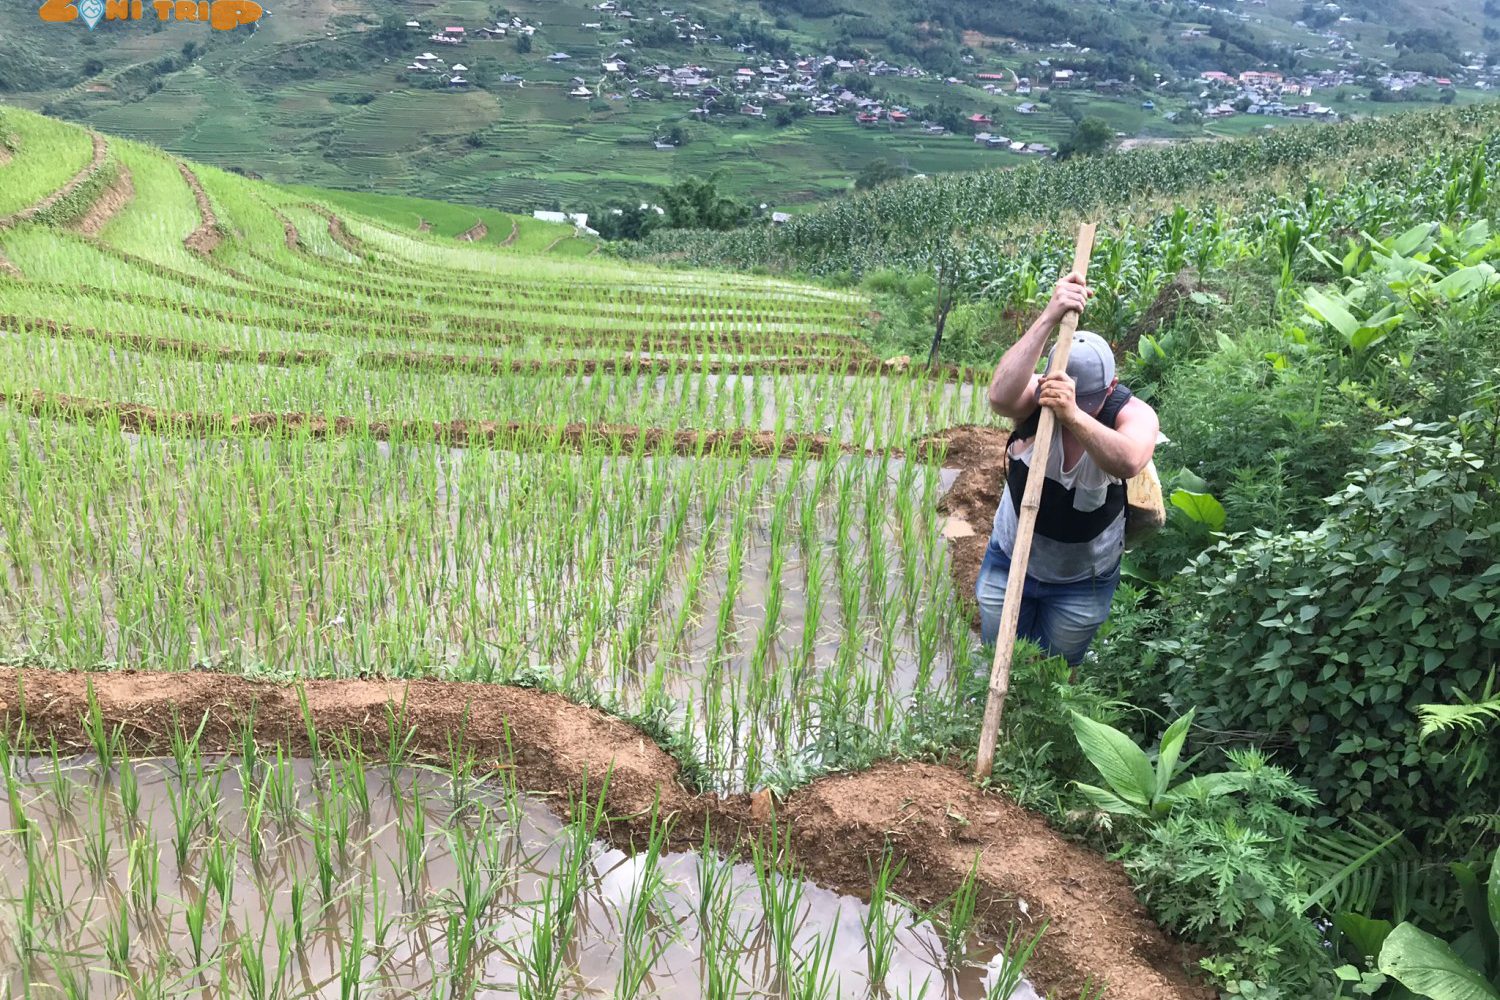 hiking mu cang chai- vietnam